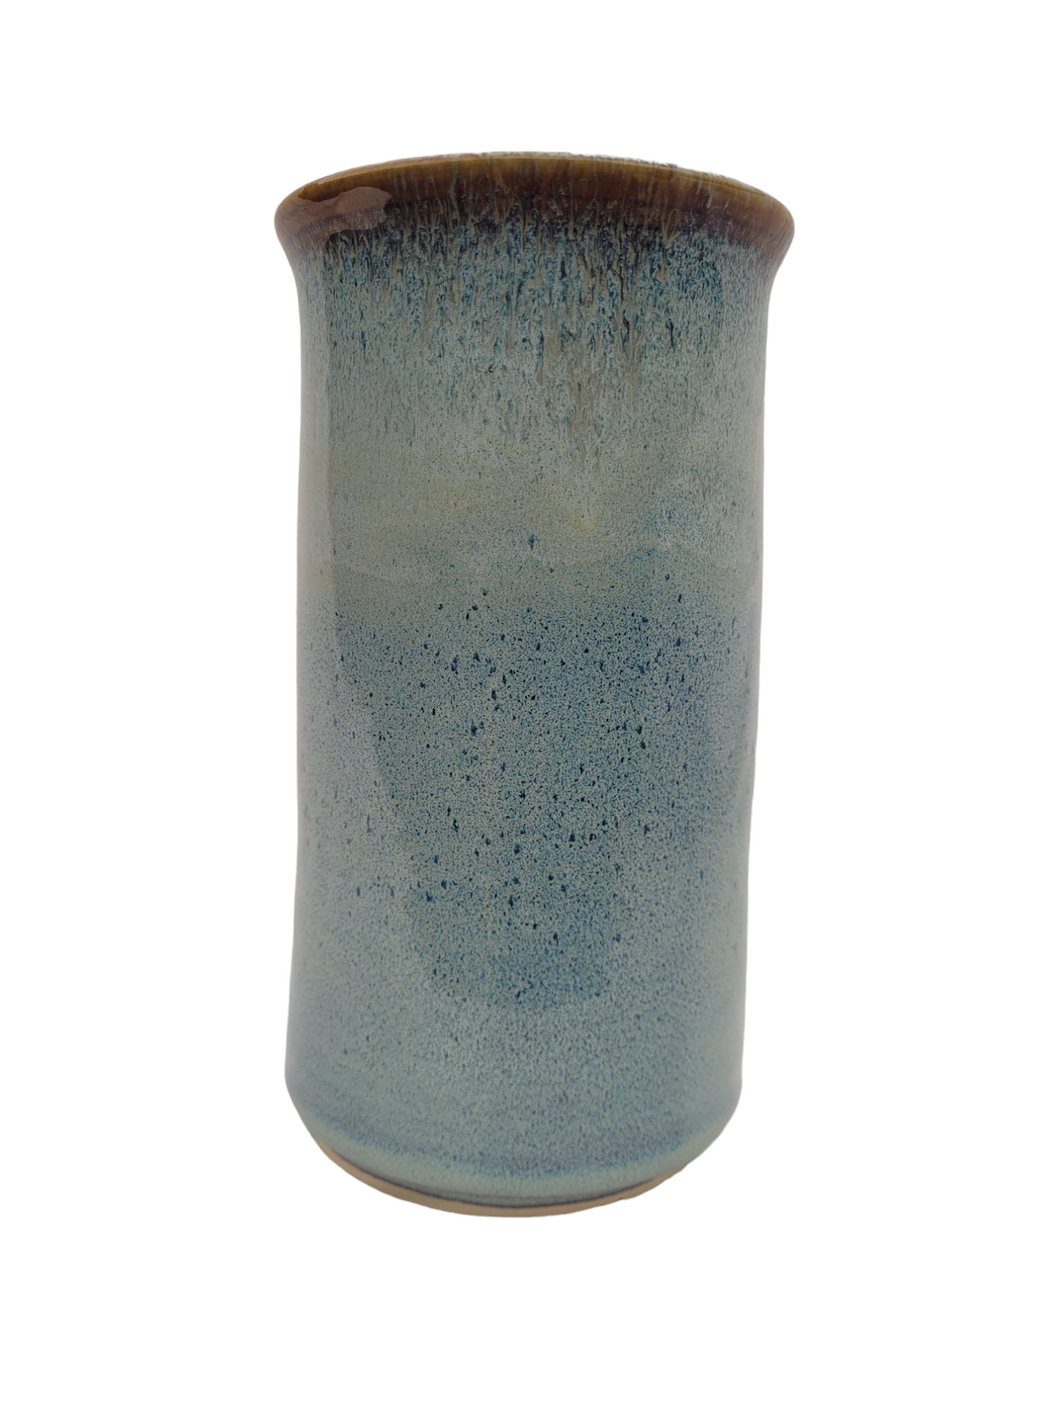 Column Vase - Jericho